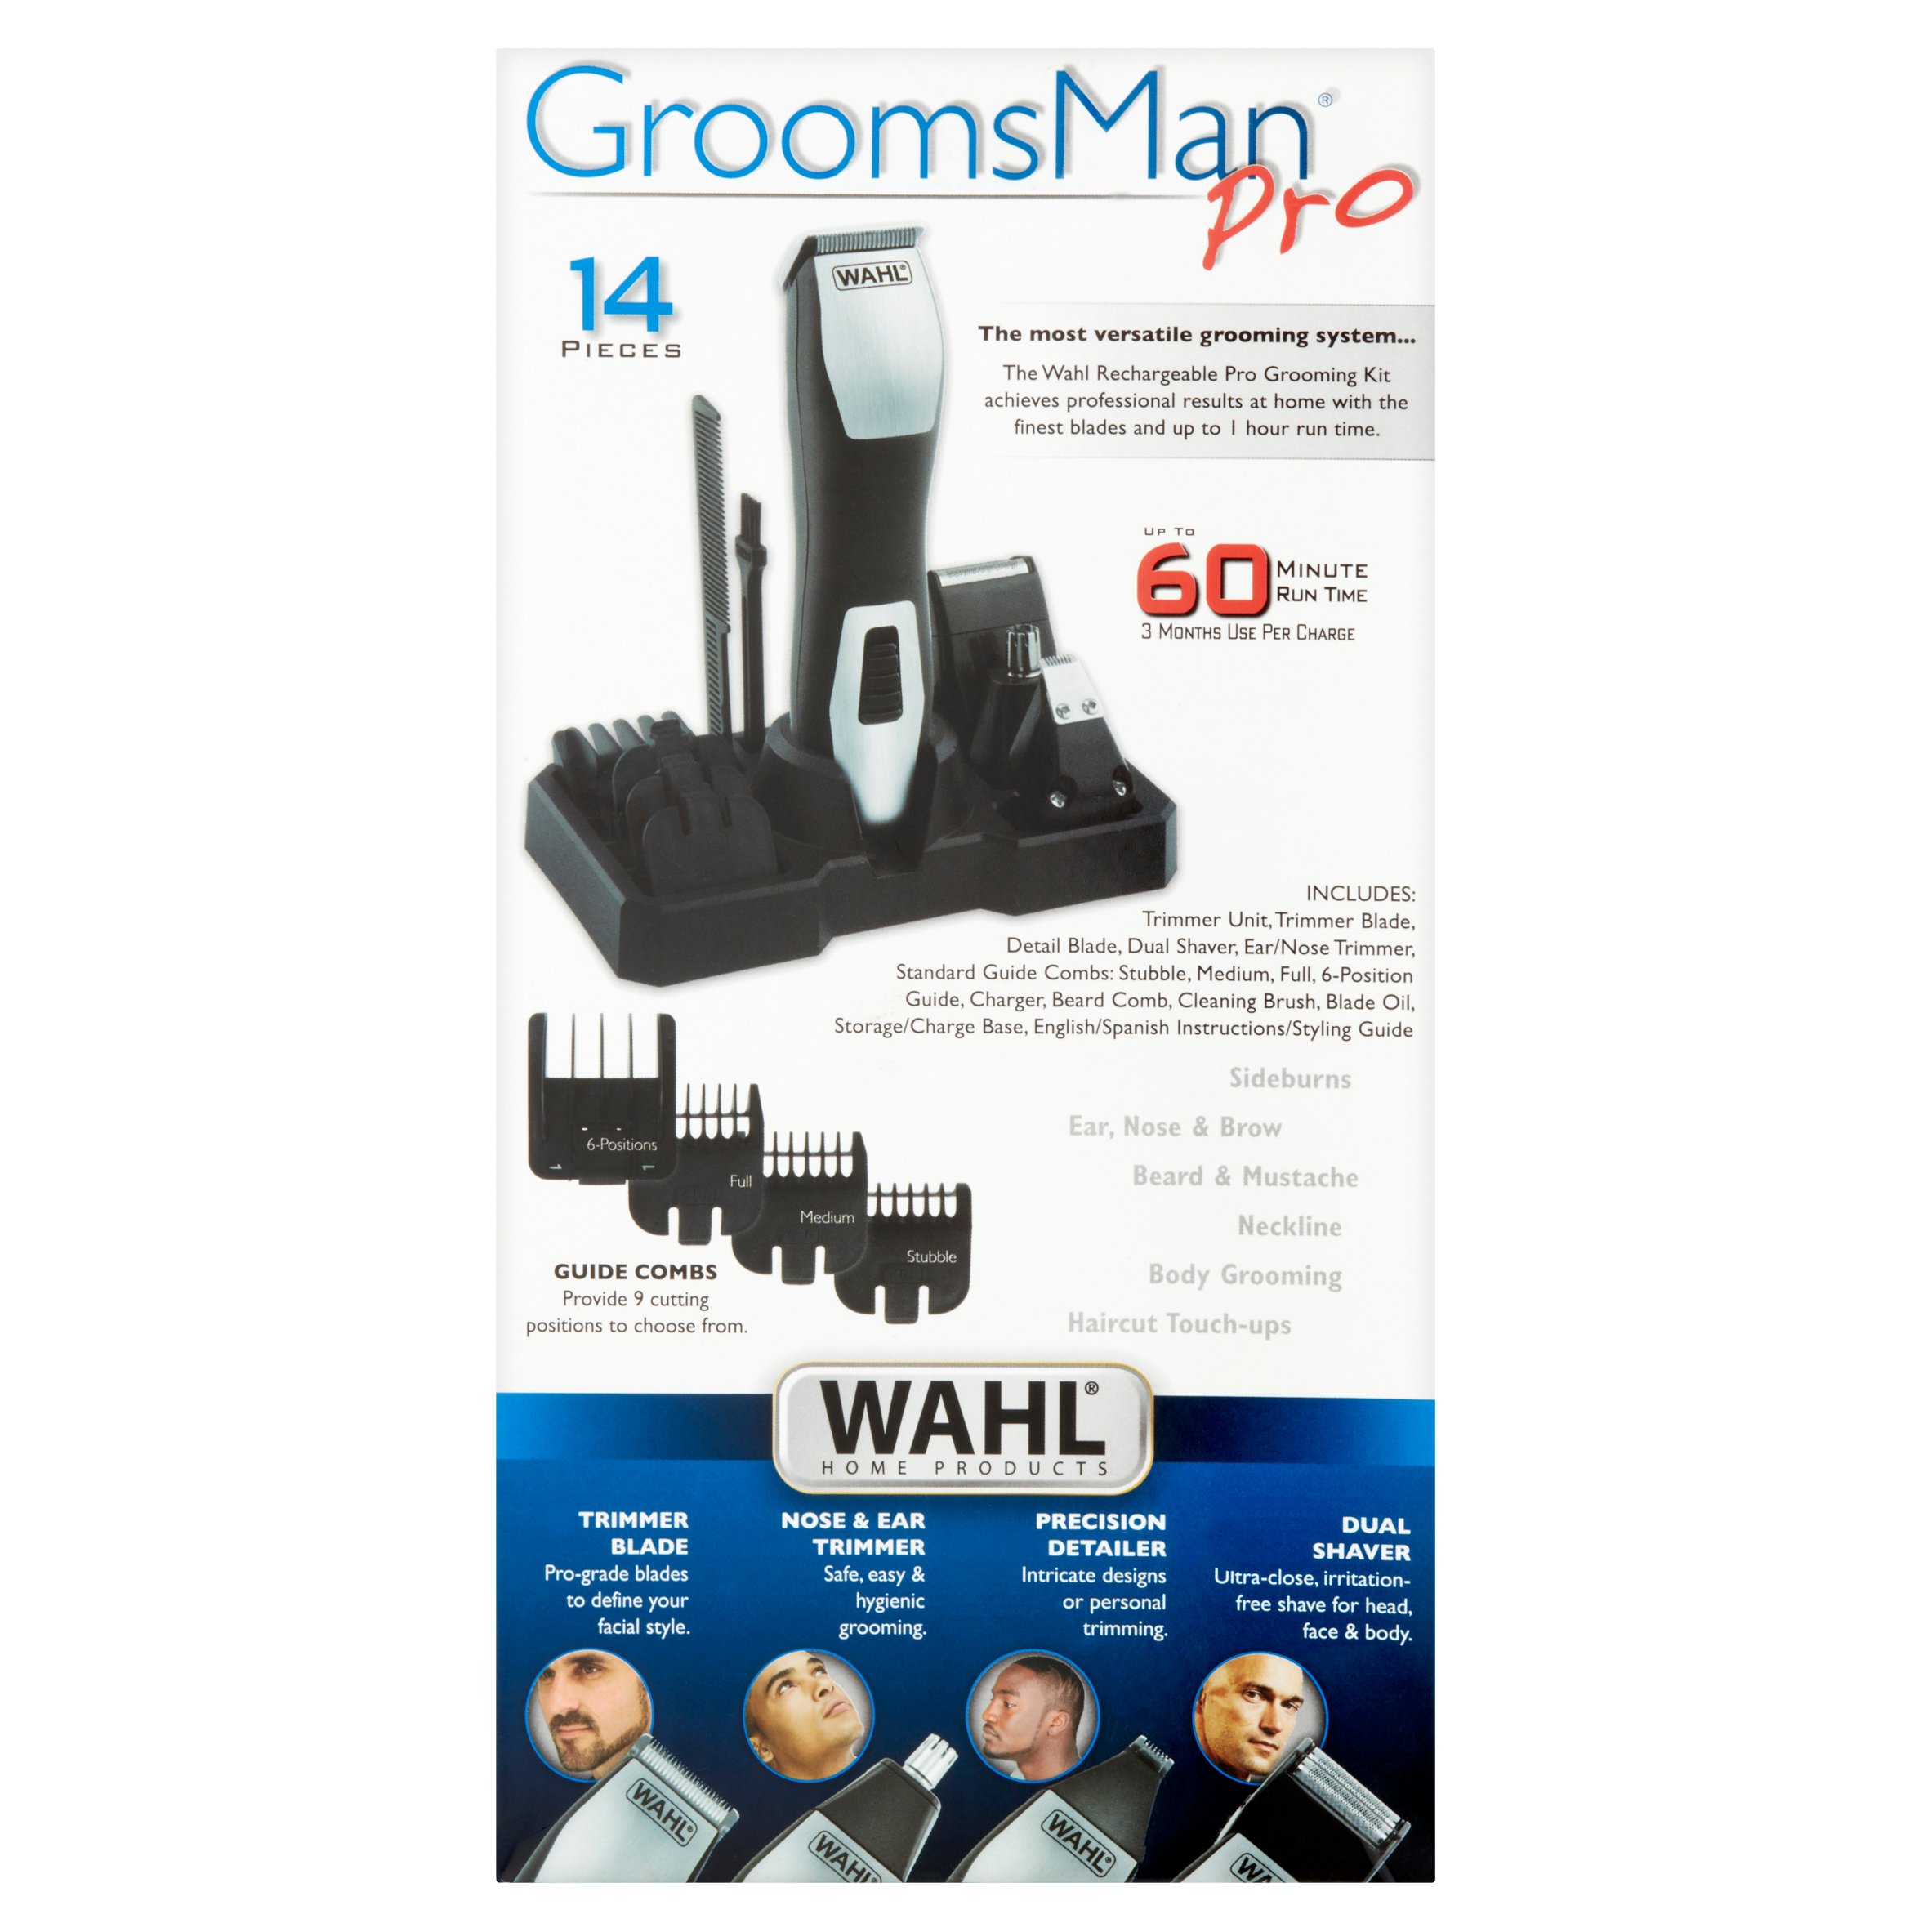 Wahl Groomsman Pro Rechargeable Grooming Kit #9855-300 - image 4 of 4